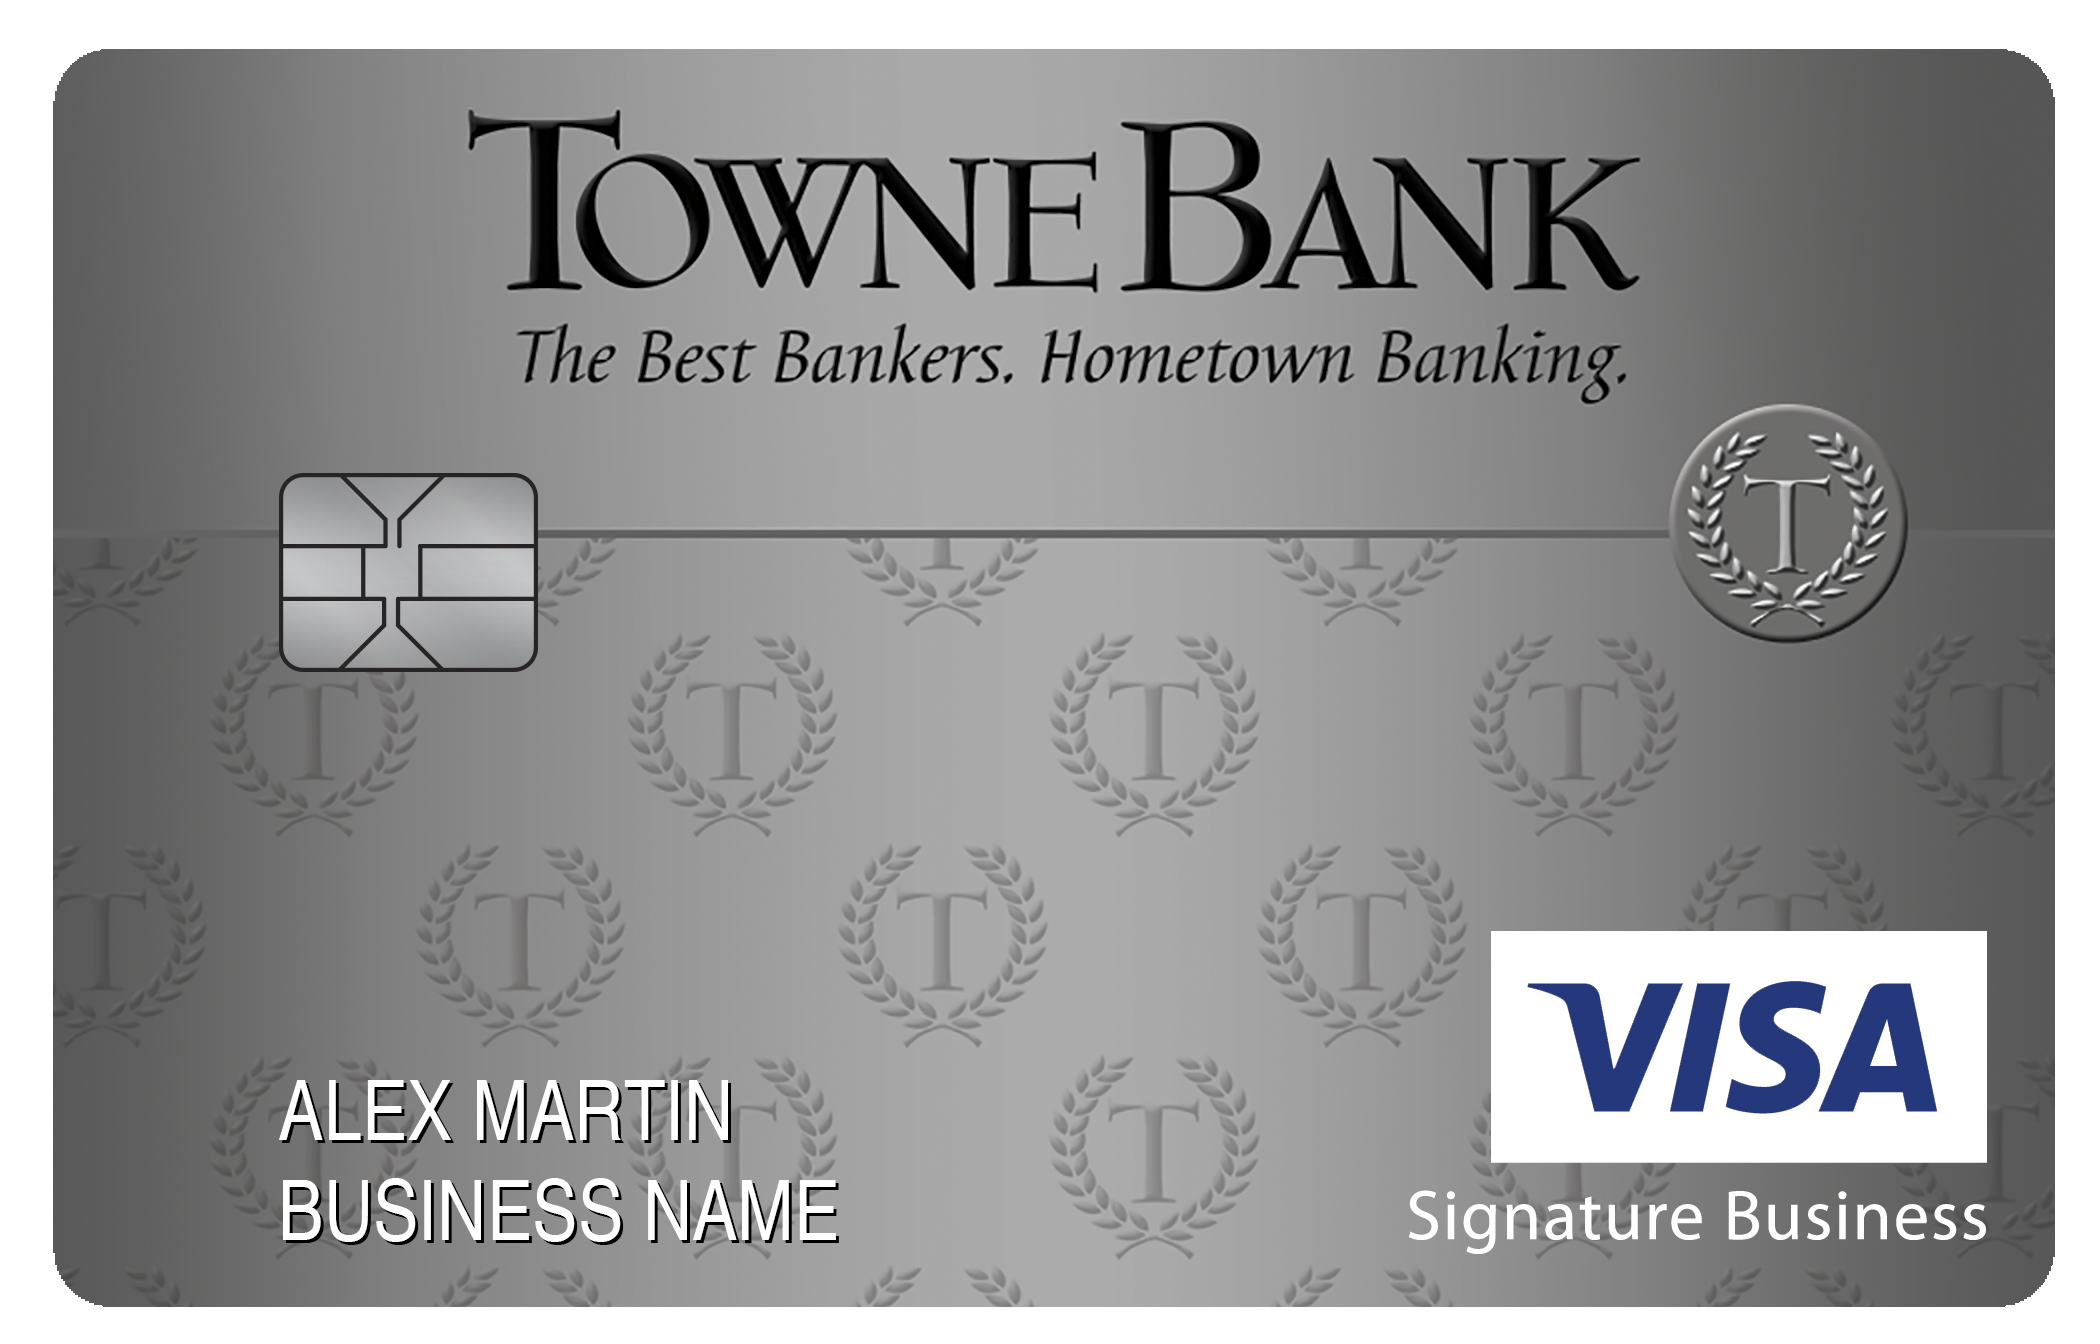 TowneBank Smart Business Rewards Card